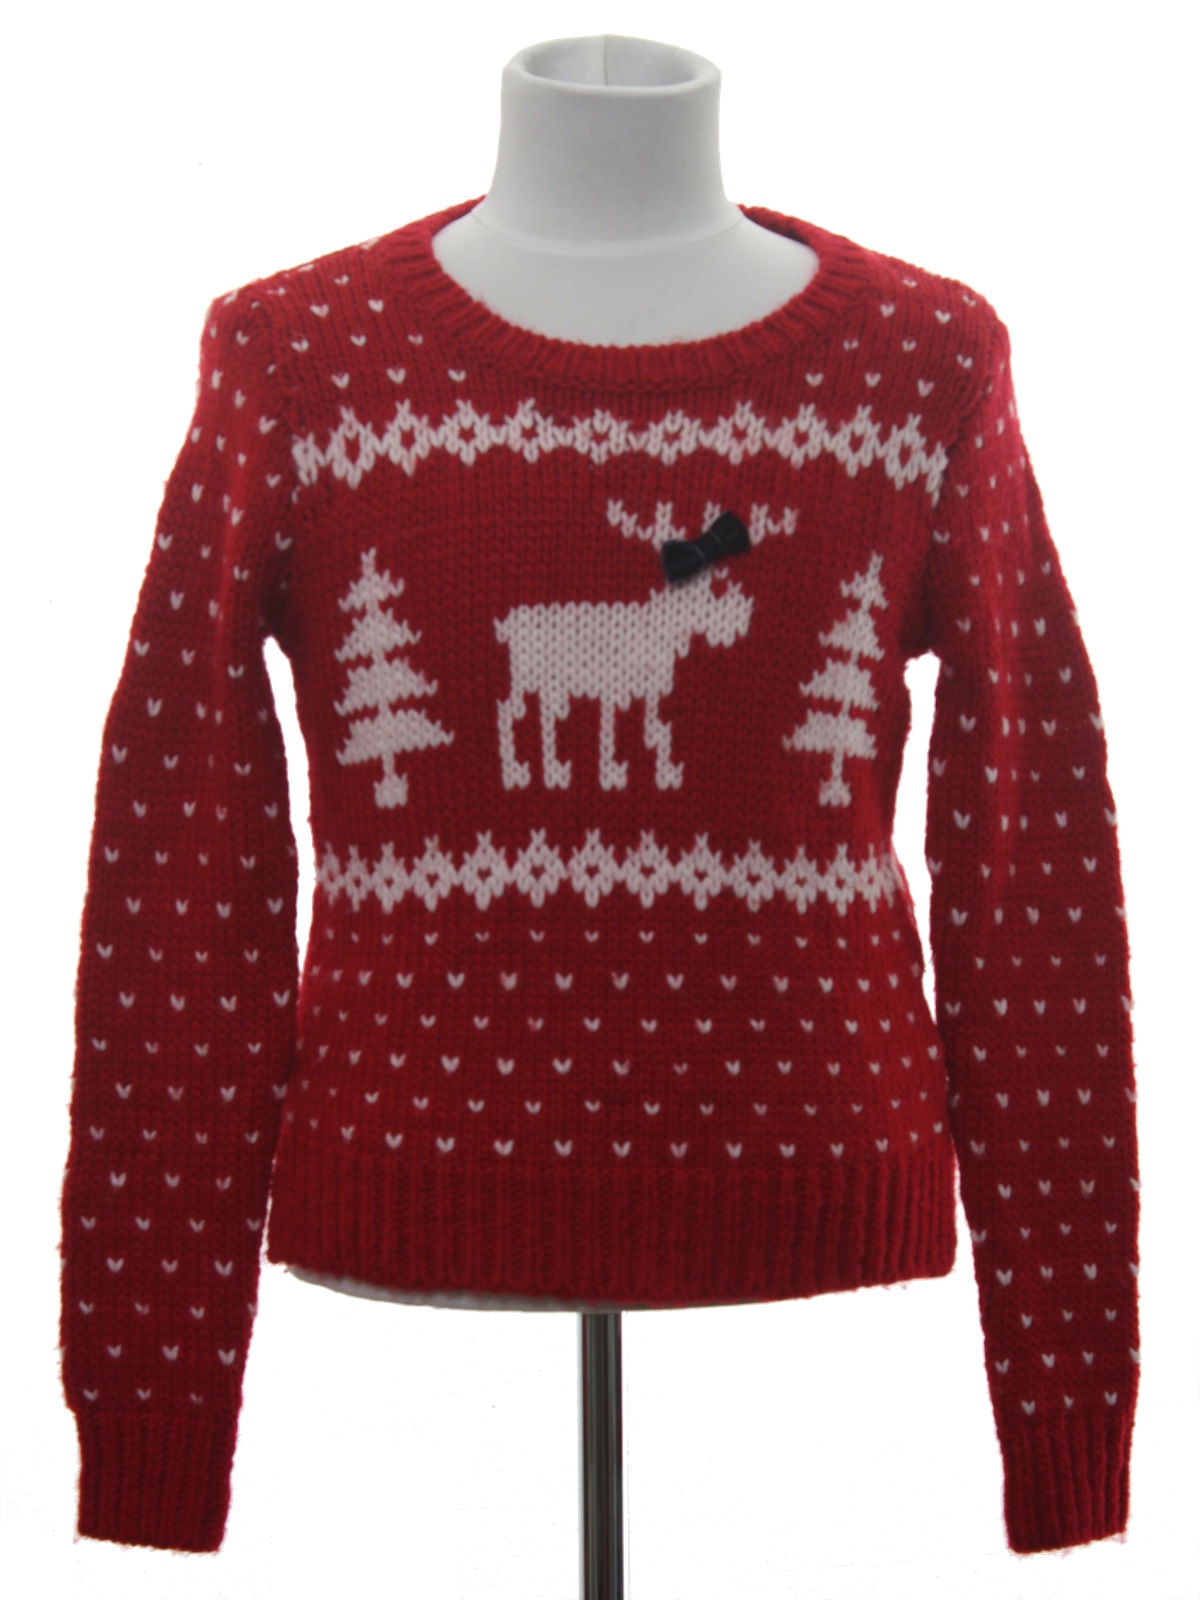 Buy > abercrombie christmas jumper > in stock